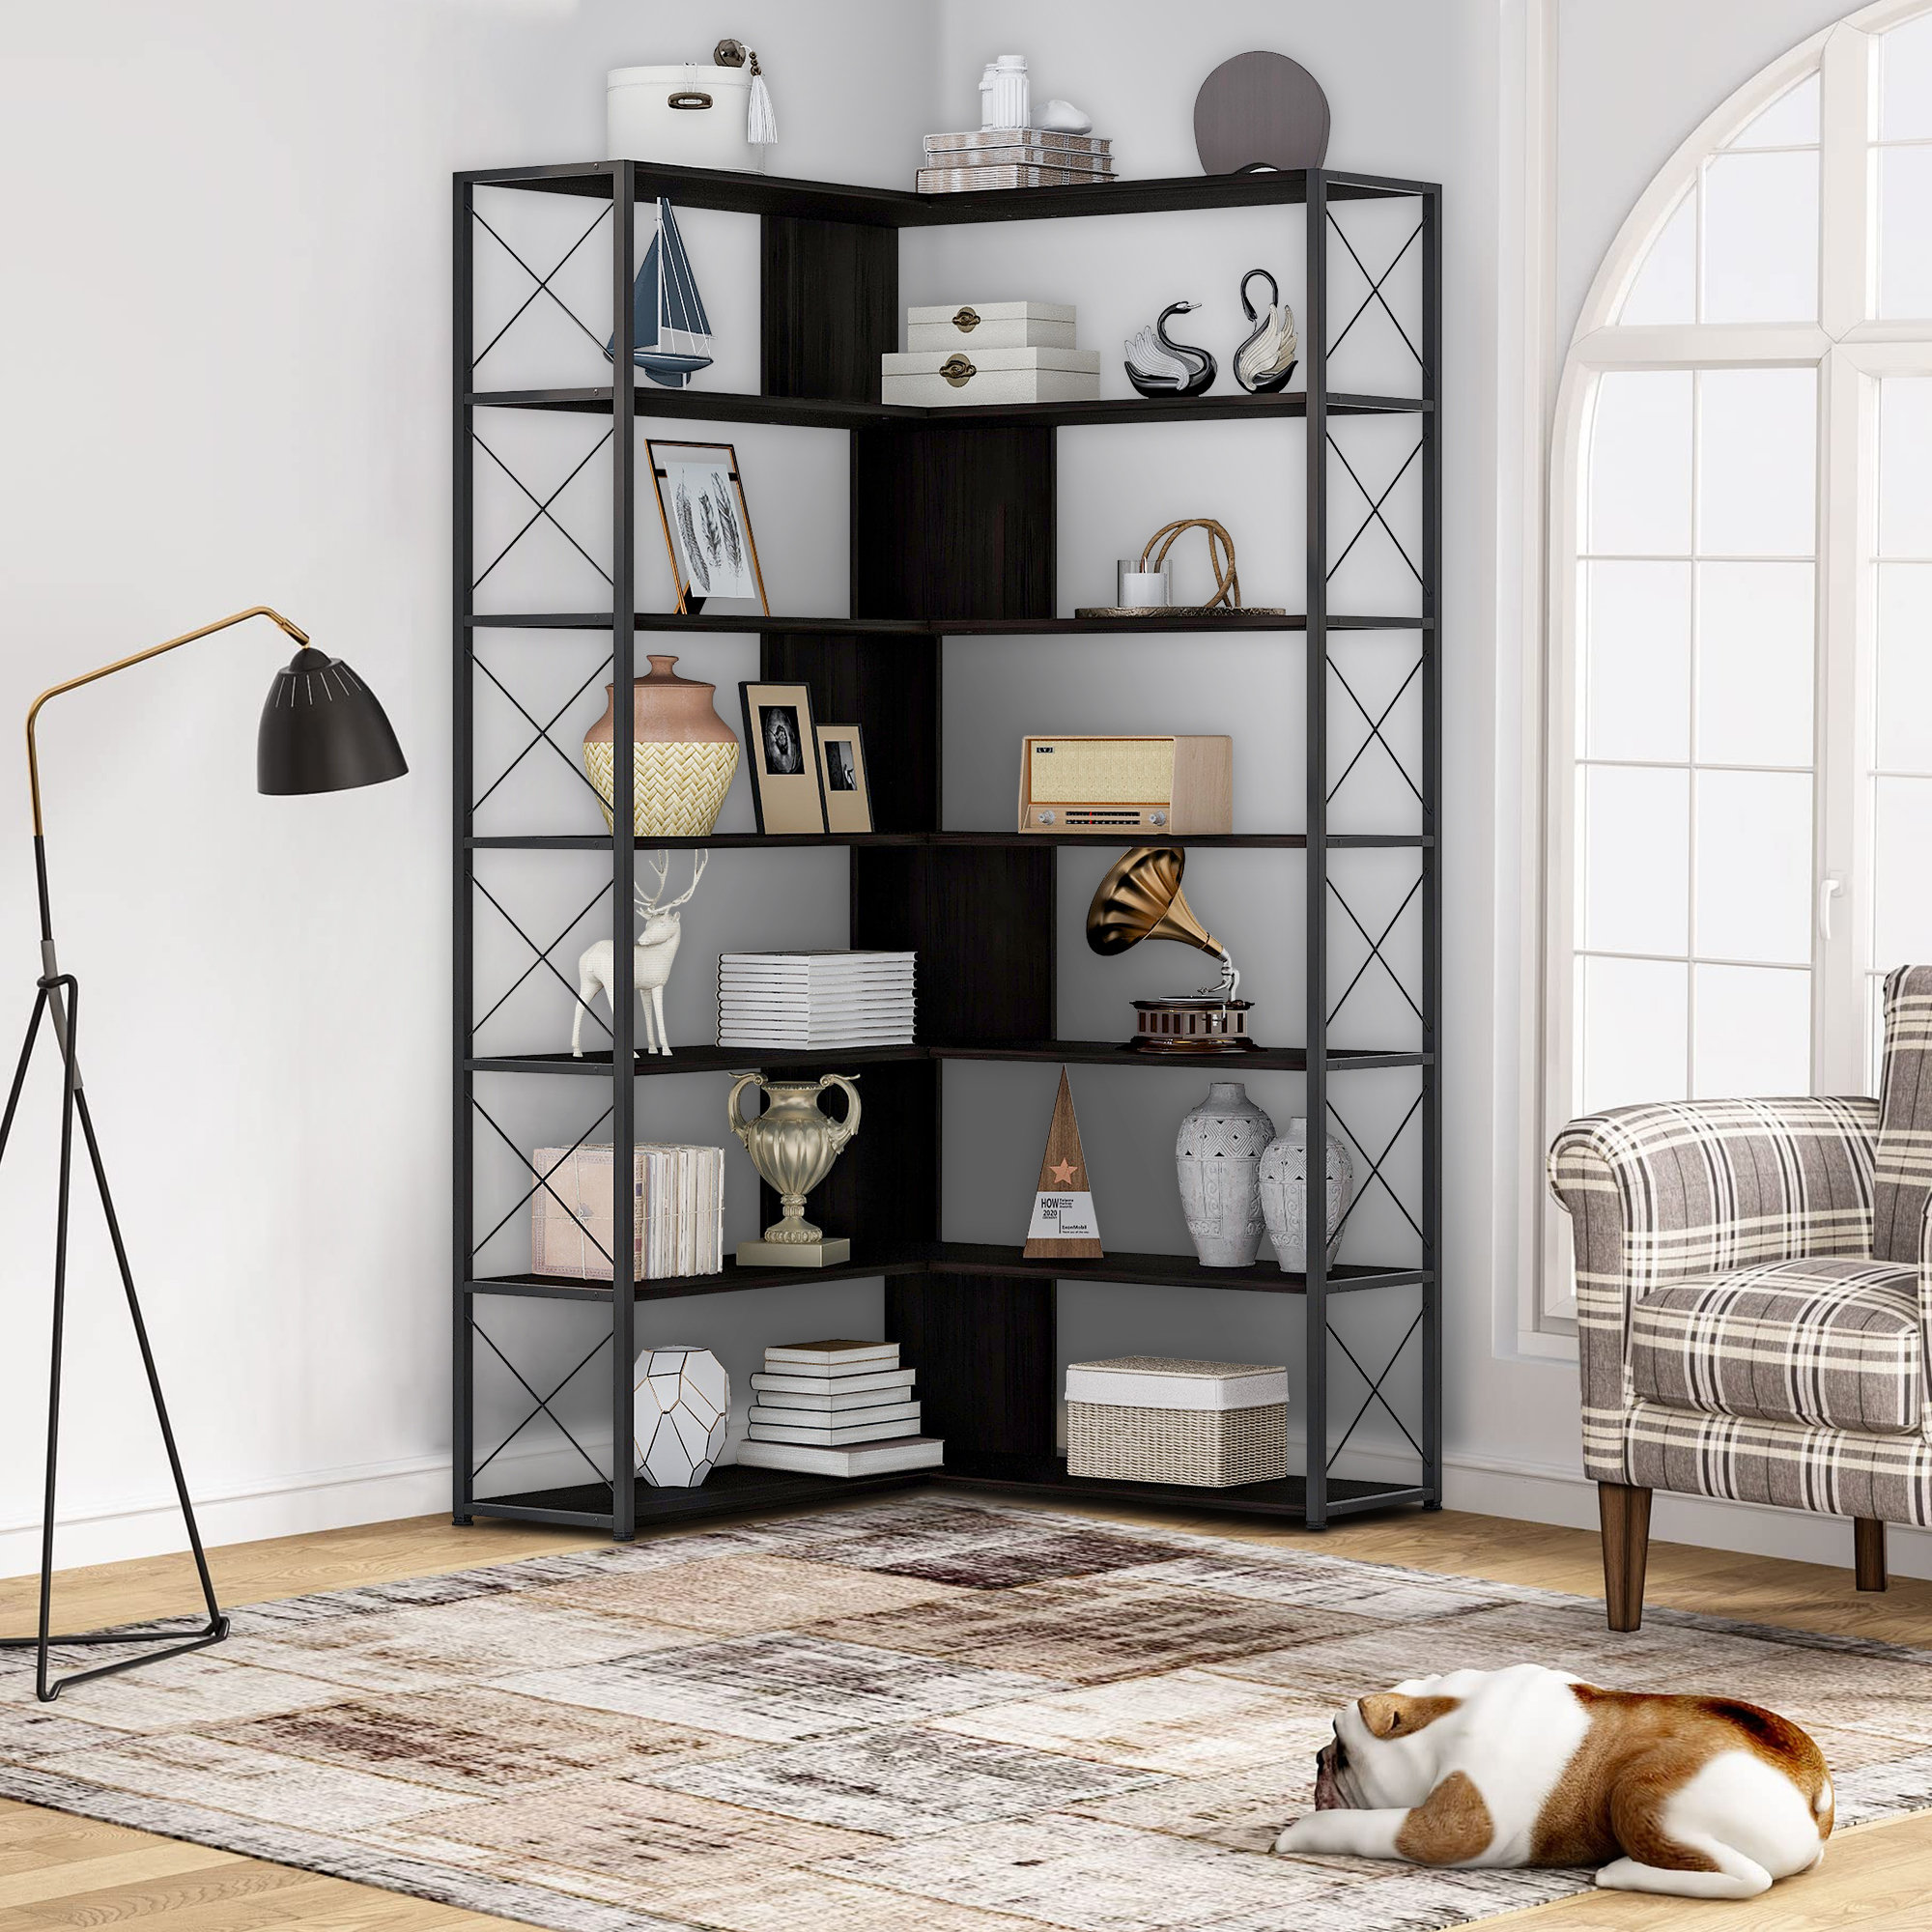 Freestanding Bookshelf for Sale, Wholesale Furniture Supplier